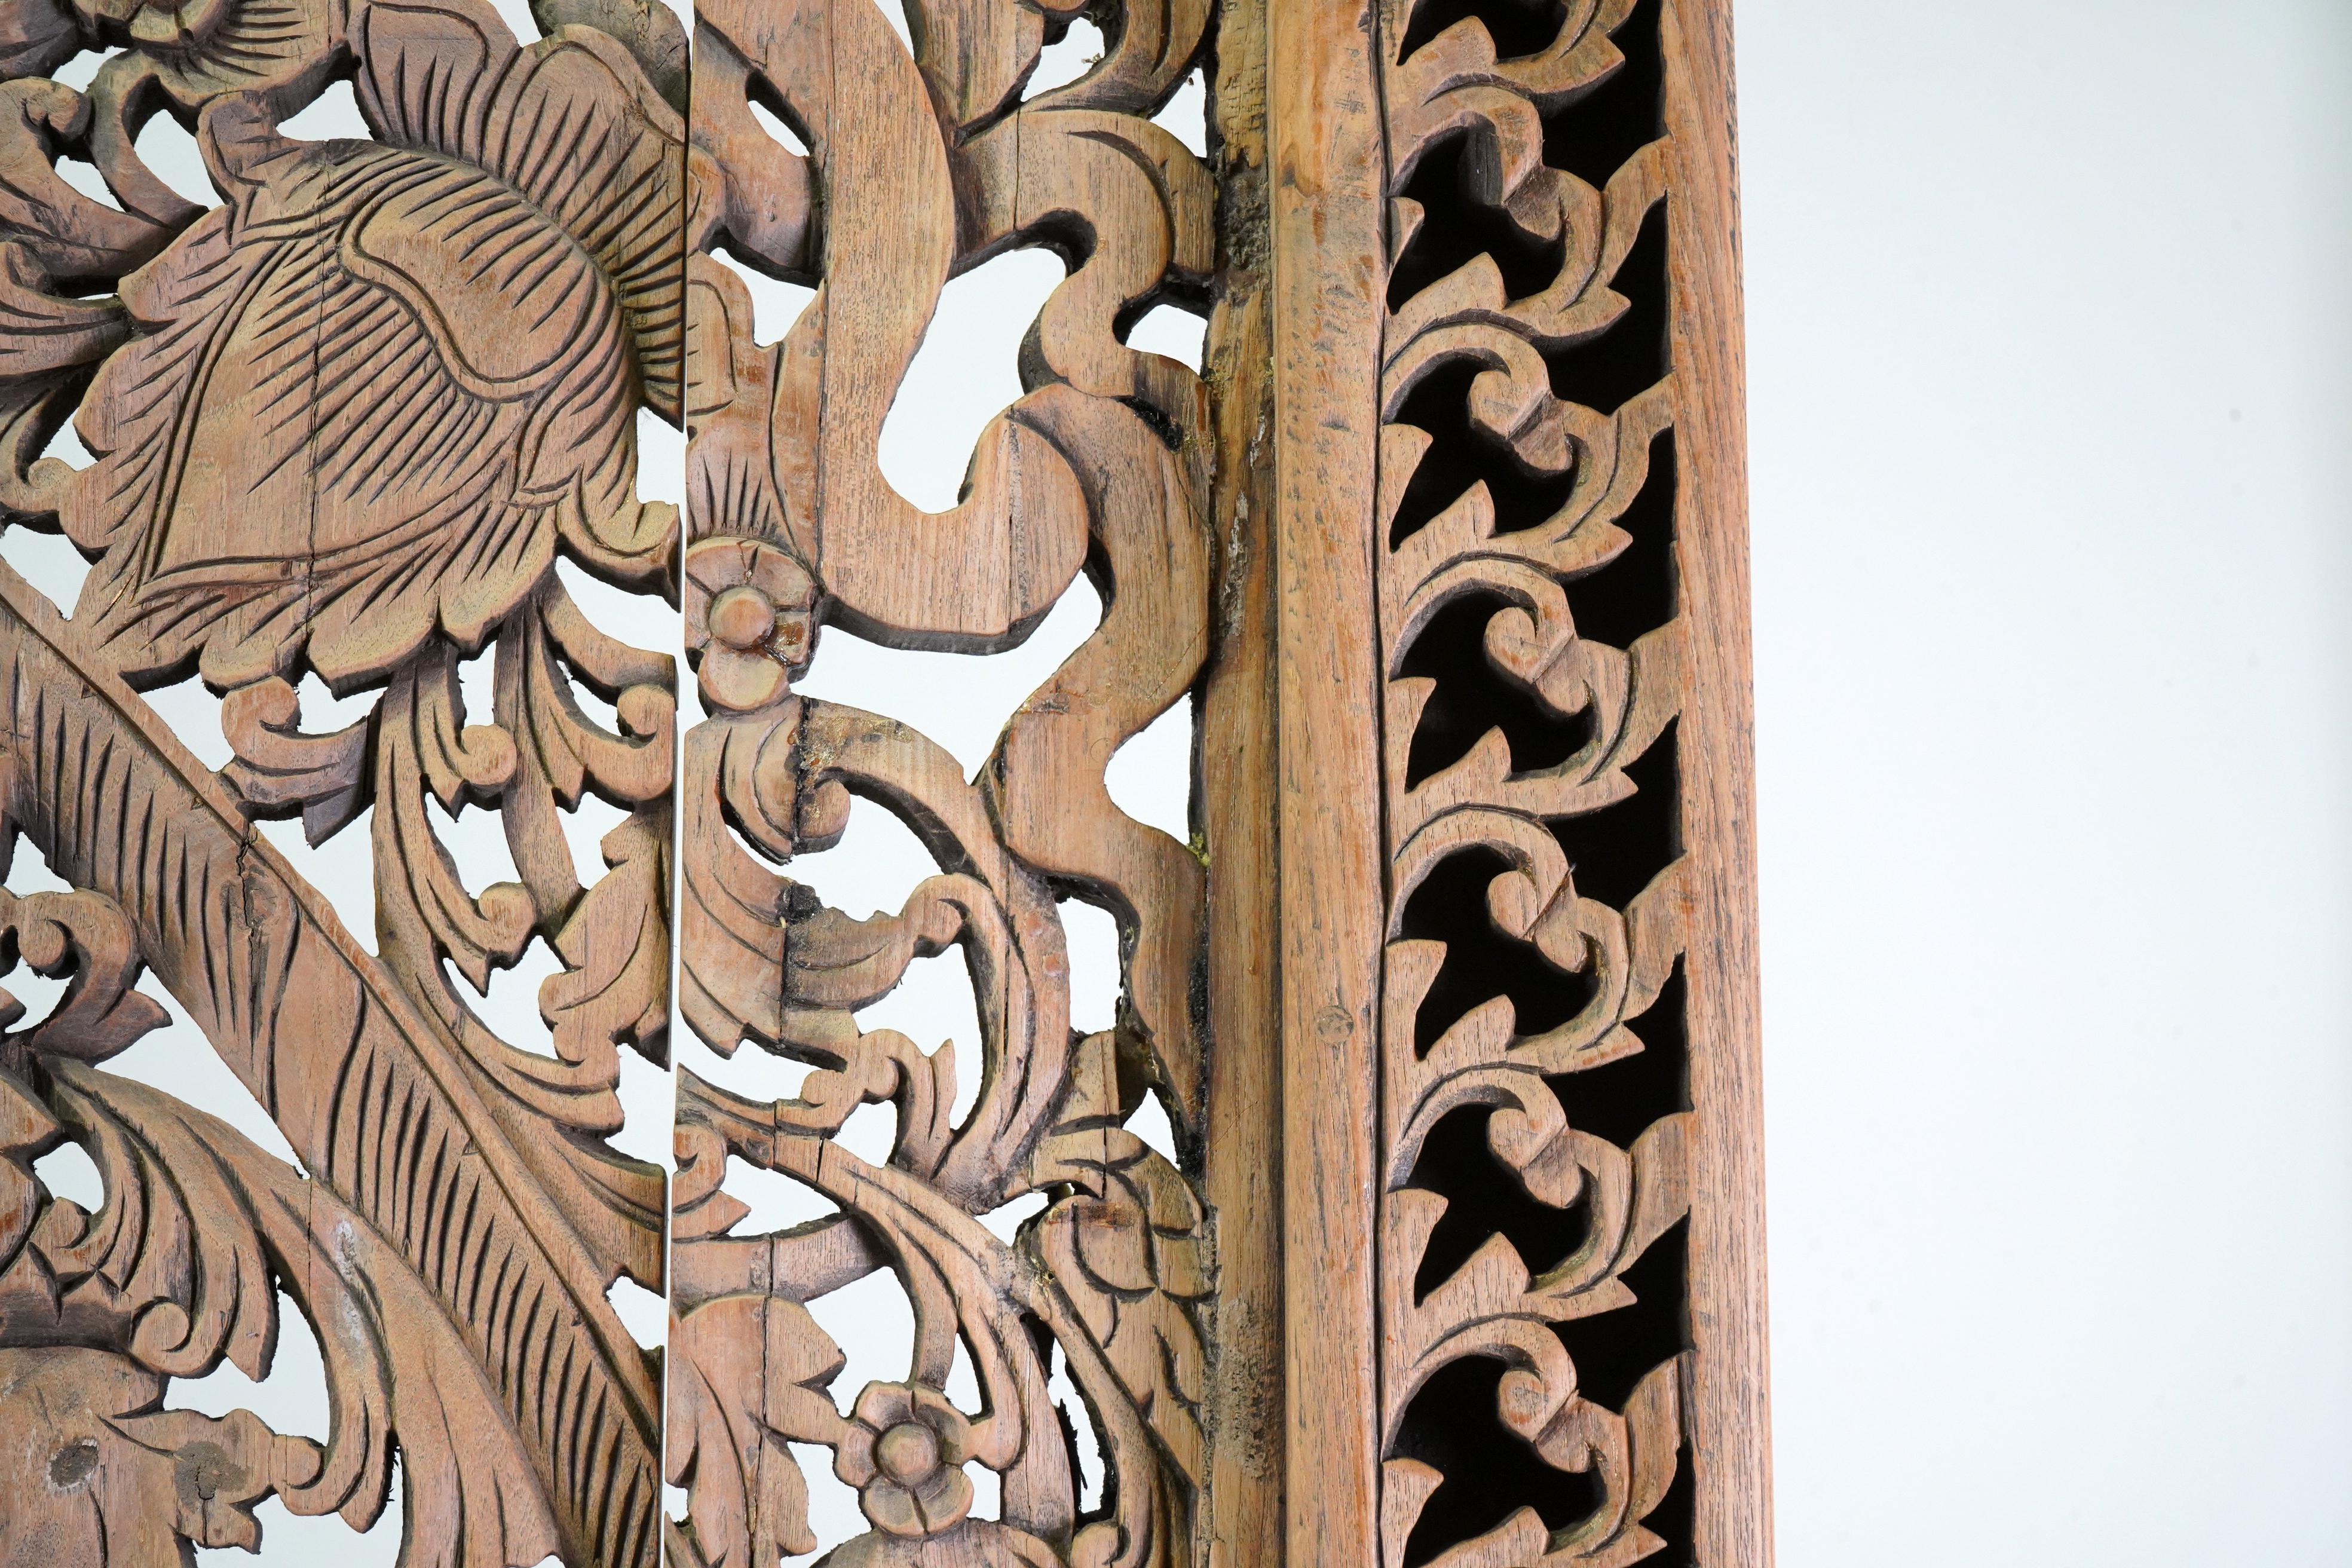 A Carved Teak Wood Lotus Flower Panel 8' x 8' 1